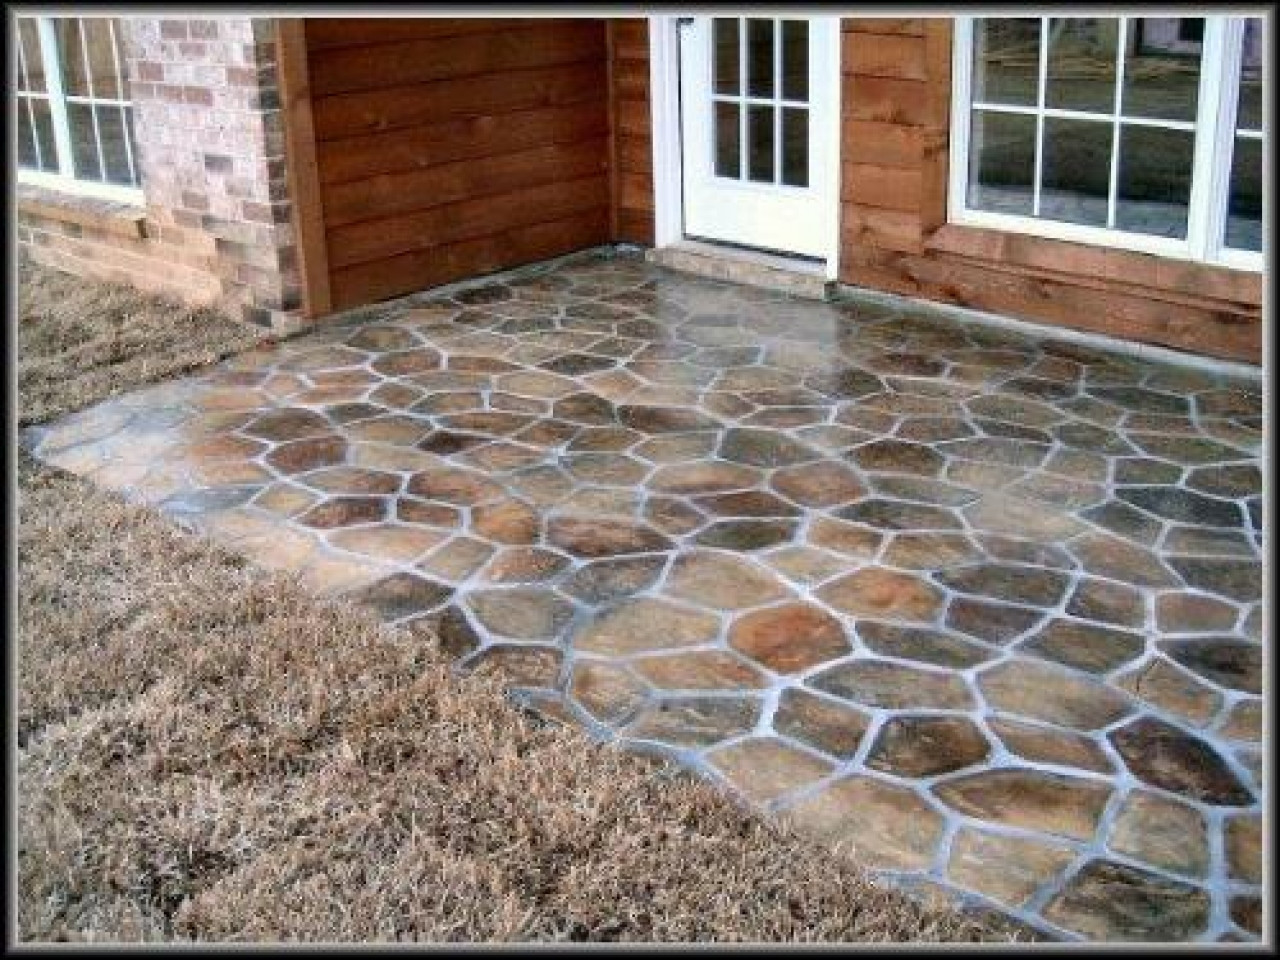 Best ideas about Patio Tile Ideas
. Save or Pin Outdoor brick flooring patio flooring ideas concrete Now.